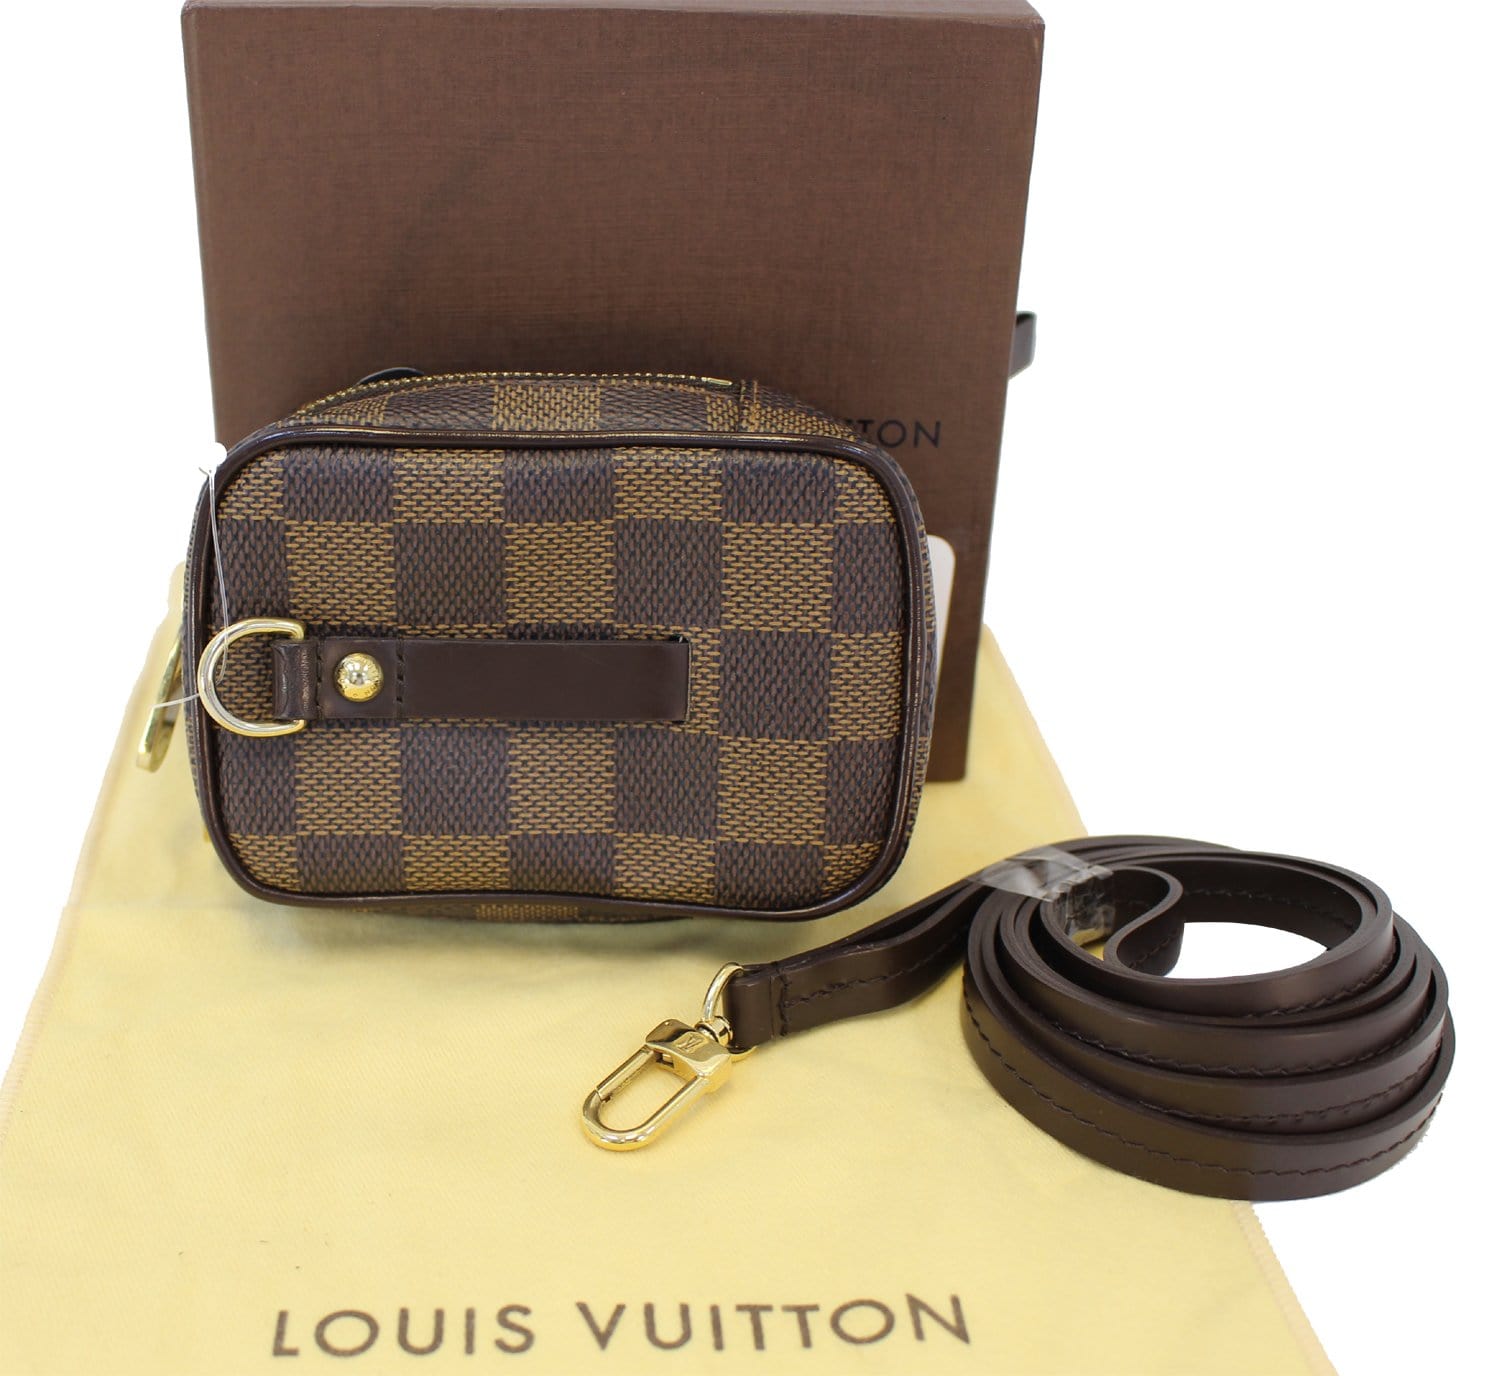 Louis Vuitton M99074 Limited Damier Ebene Japan 20th Anniversary CD Case 519lvs38